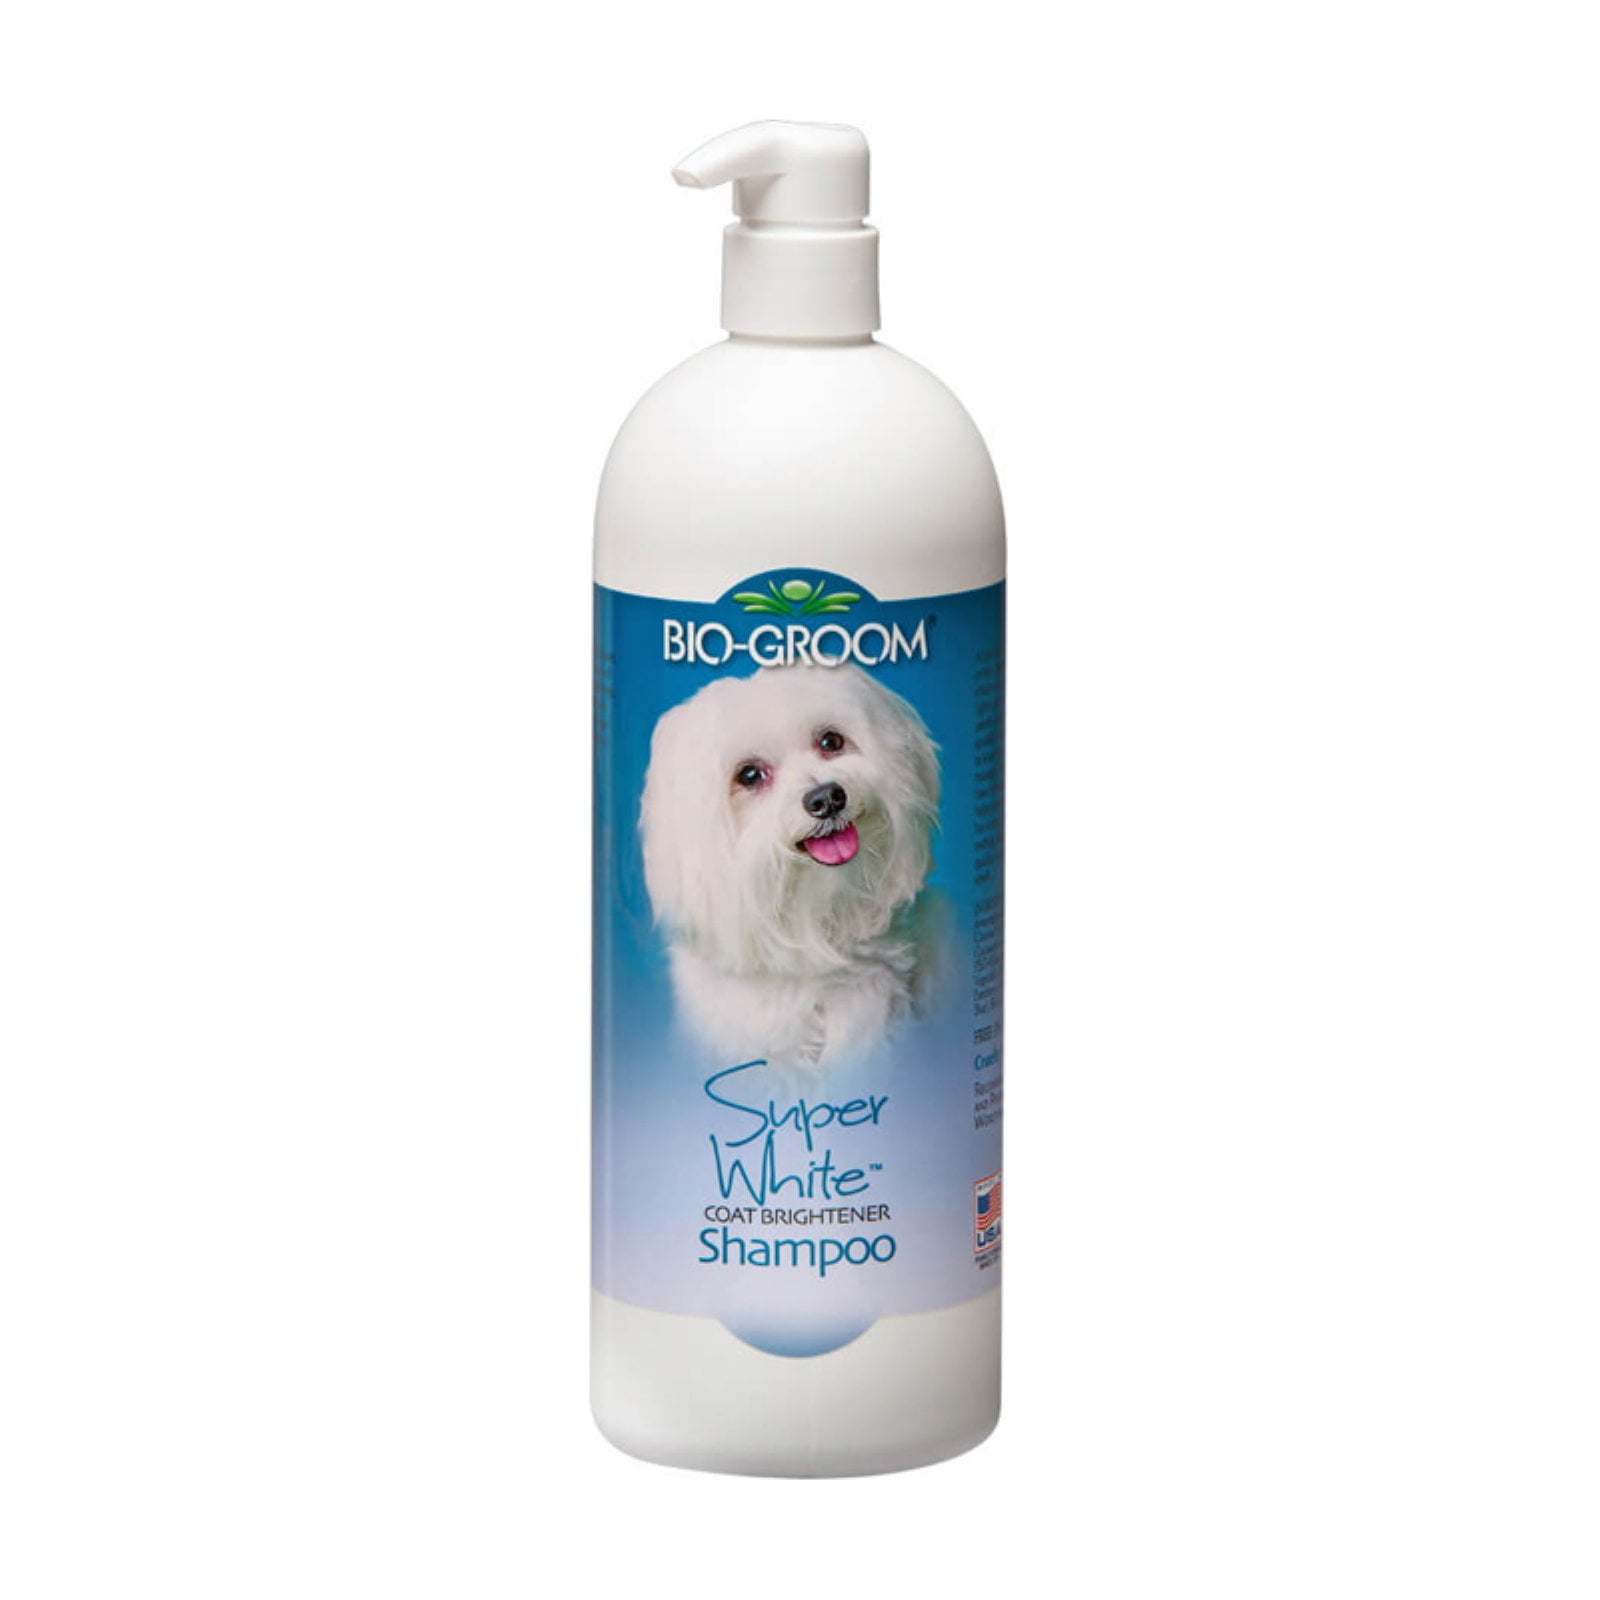 Bio-groom super white shampoo, 32-oz bottle - Walmart.com